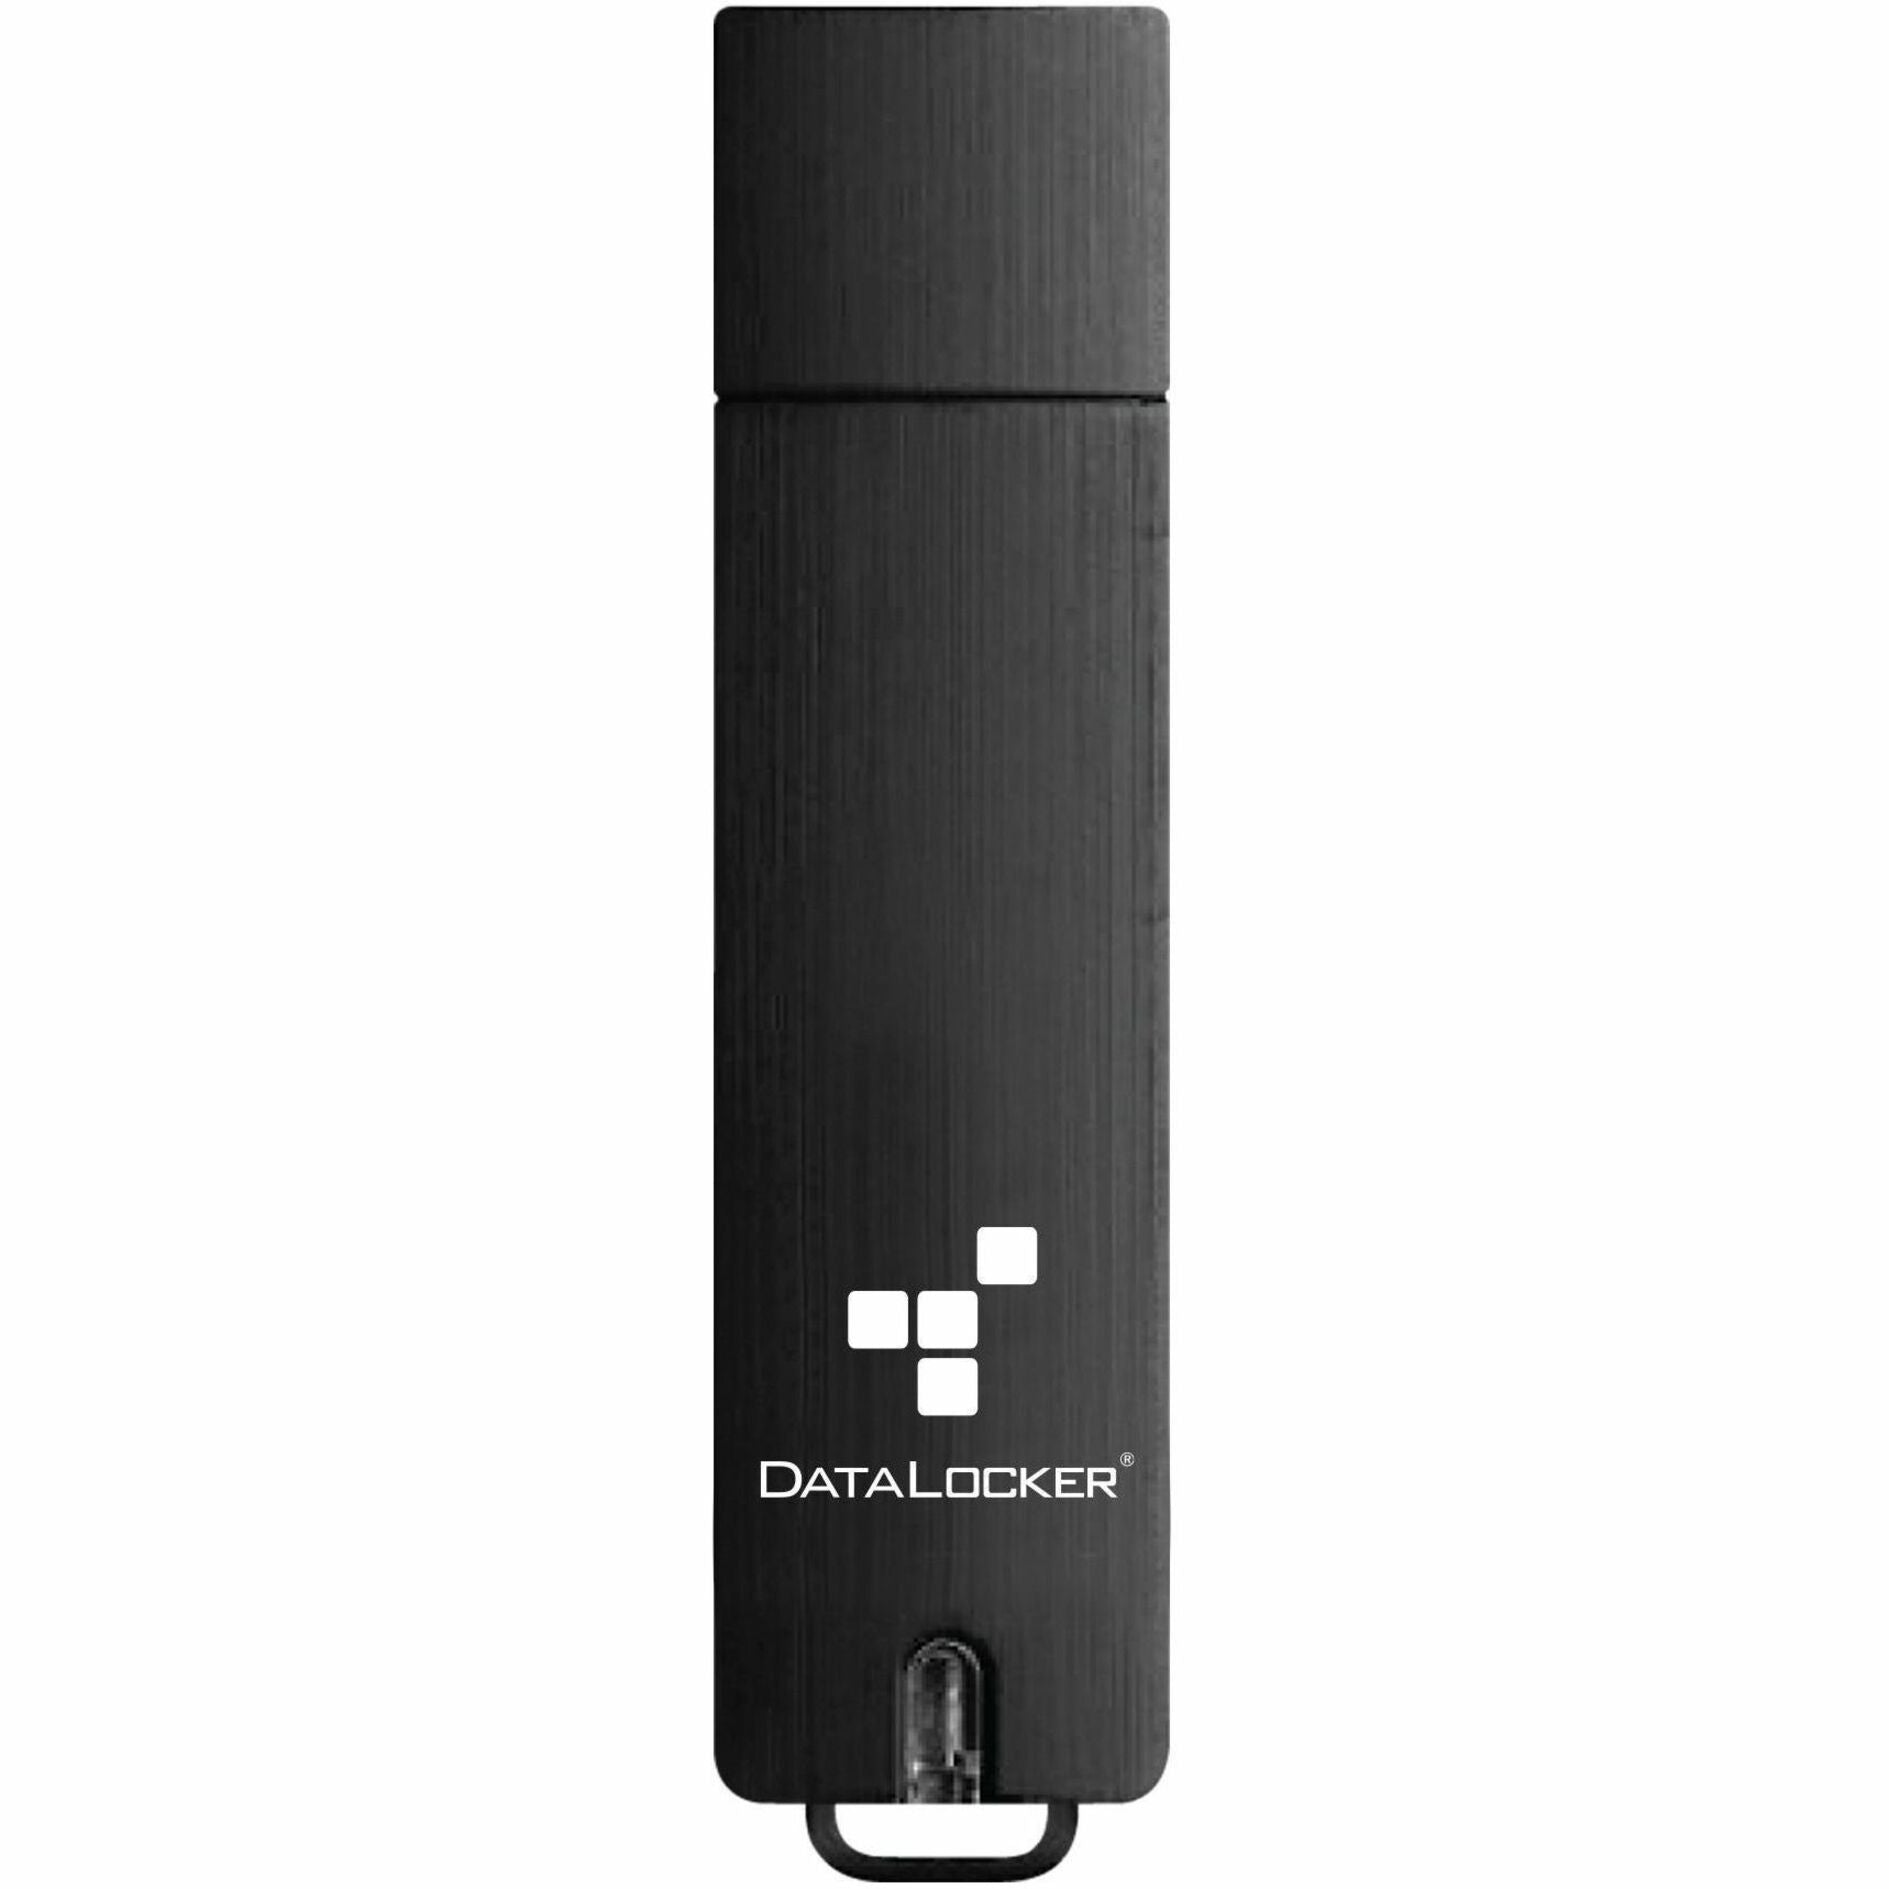 DataLocker - 数据锁  S5-008-FE-M - S5-008-FE-M  Sentry - 哨兵  5 - 5  8GB - 8GB  USB 3.2 (Gen 1) - USB 3.2 (第一代)  Type A - A 类型  Flash Drive - 闪存驱动器  Portable - 可携带的  Secure - 安全的  Storage Solution - 存储解决方案